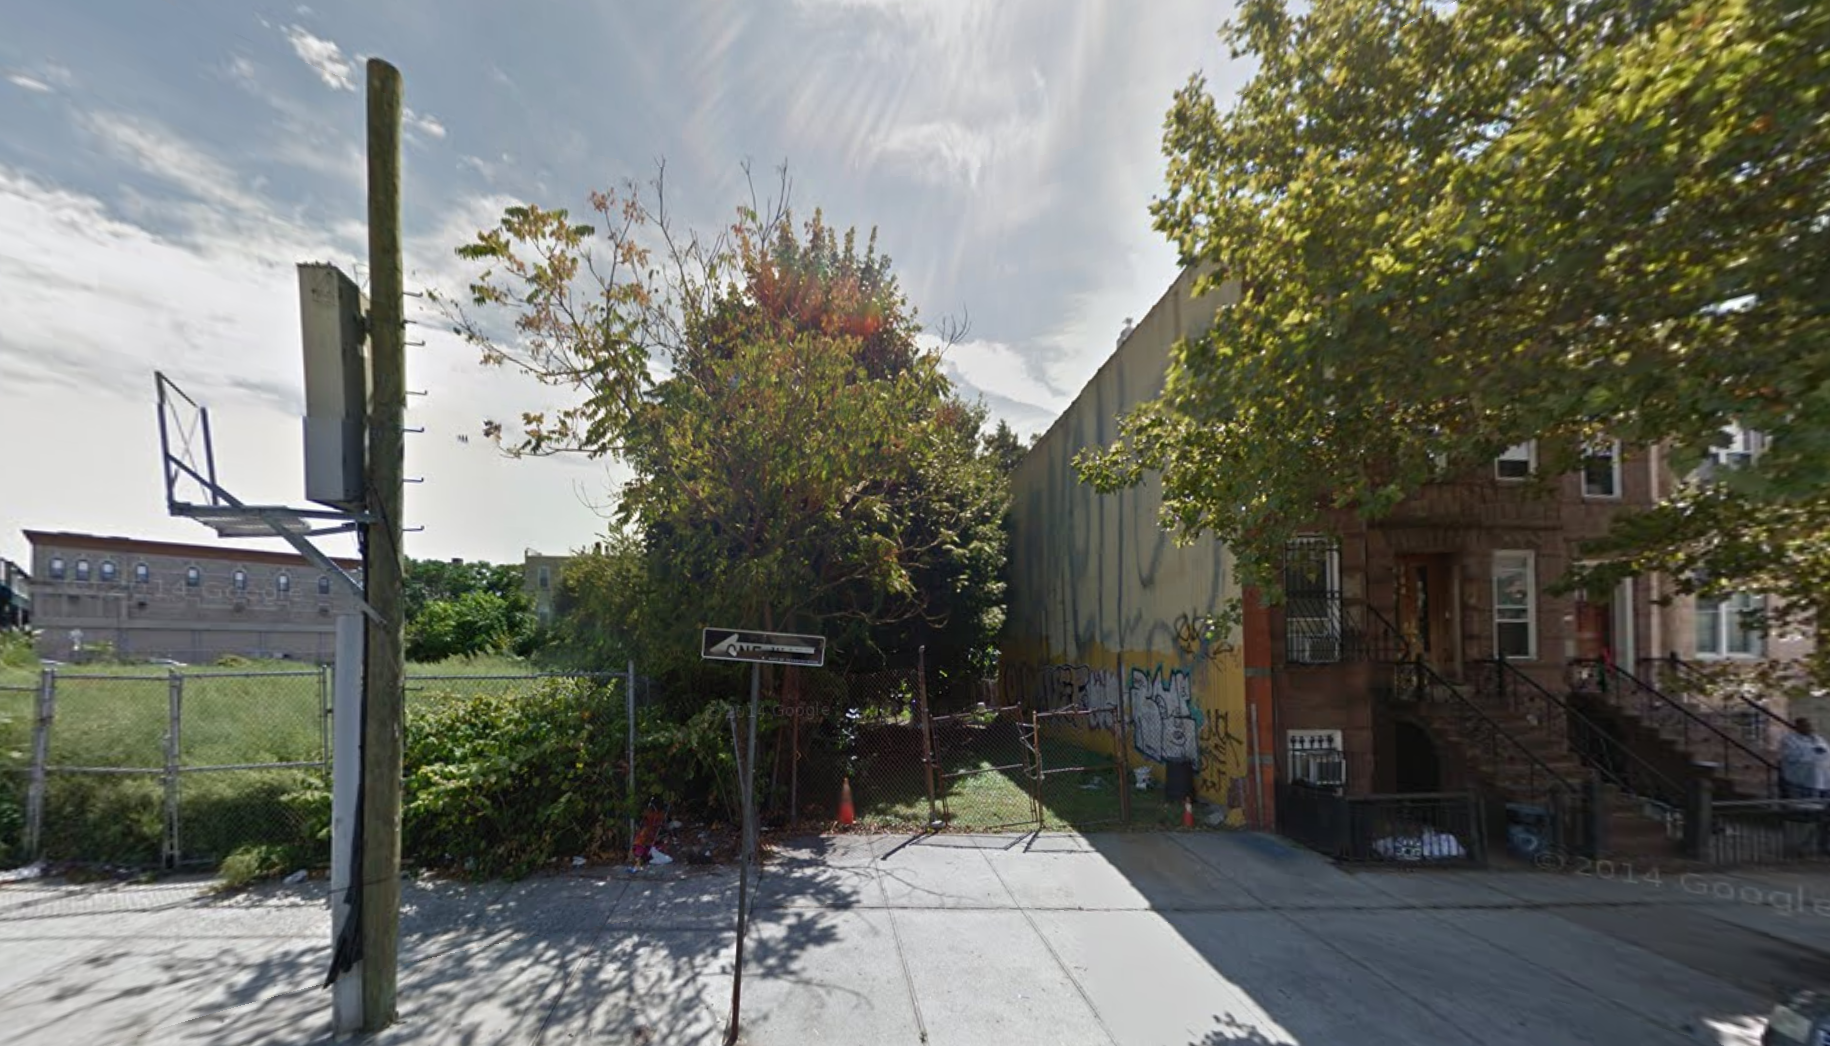 776 Decatur Street, image via Google Maps